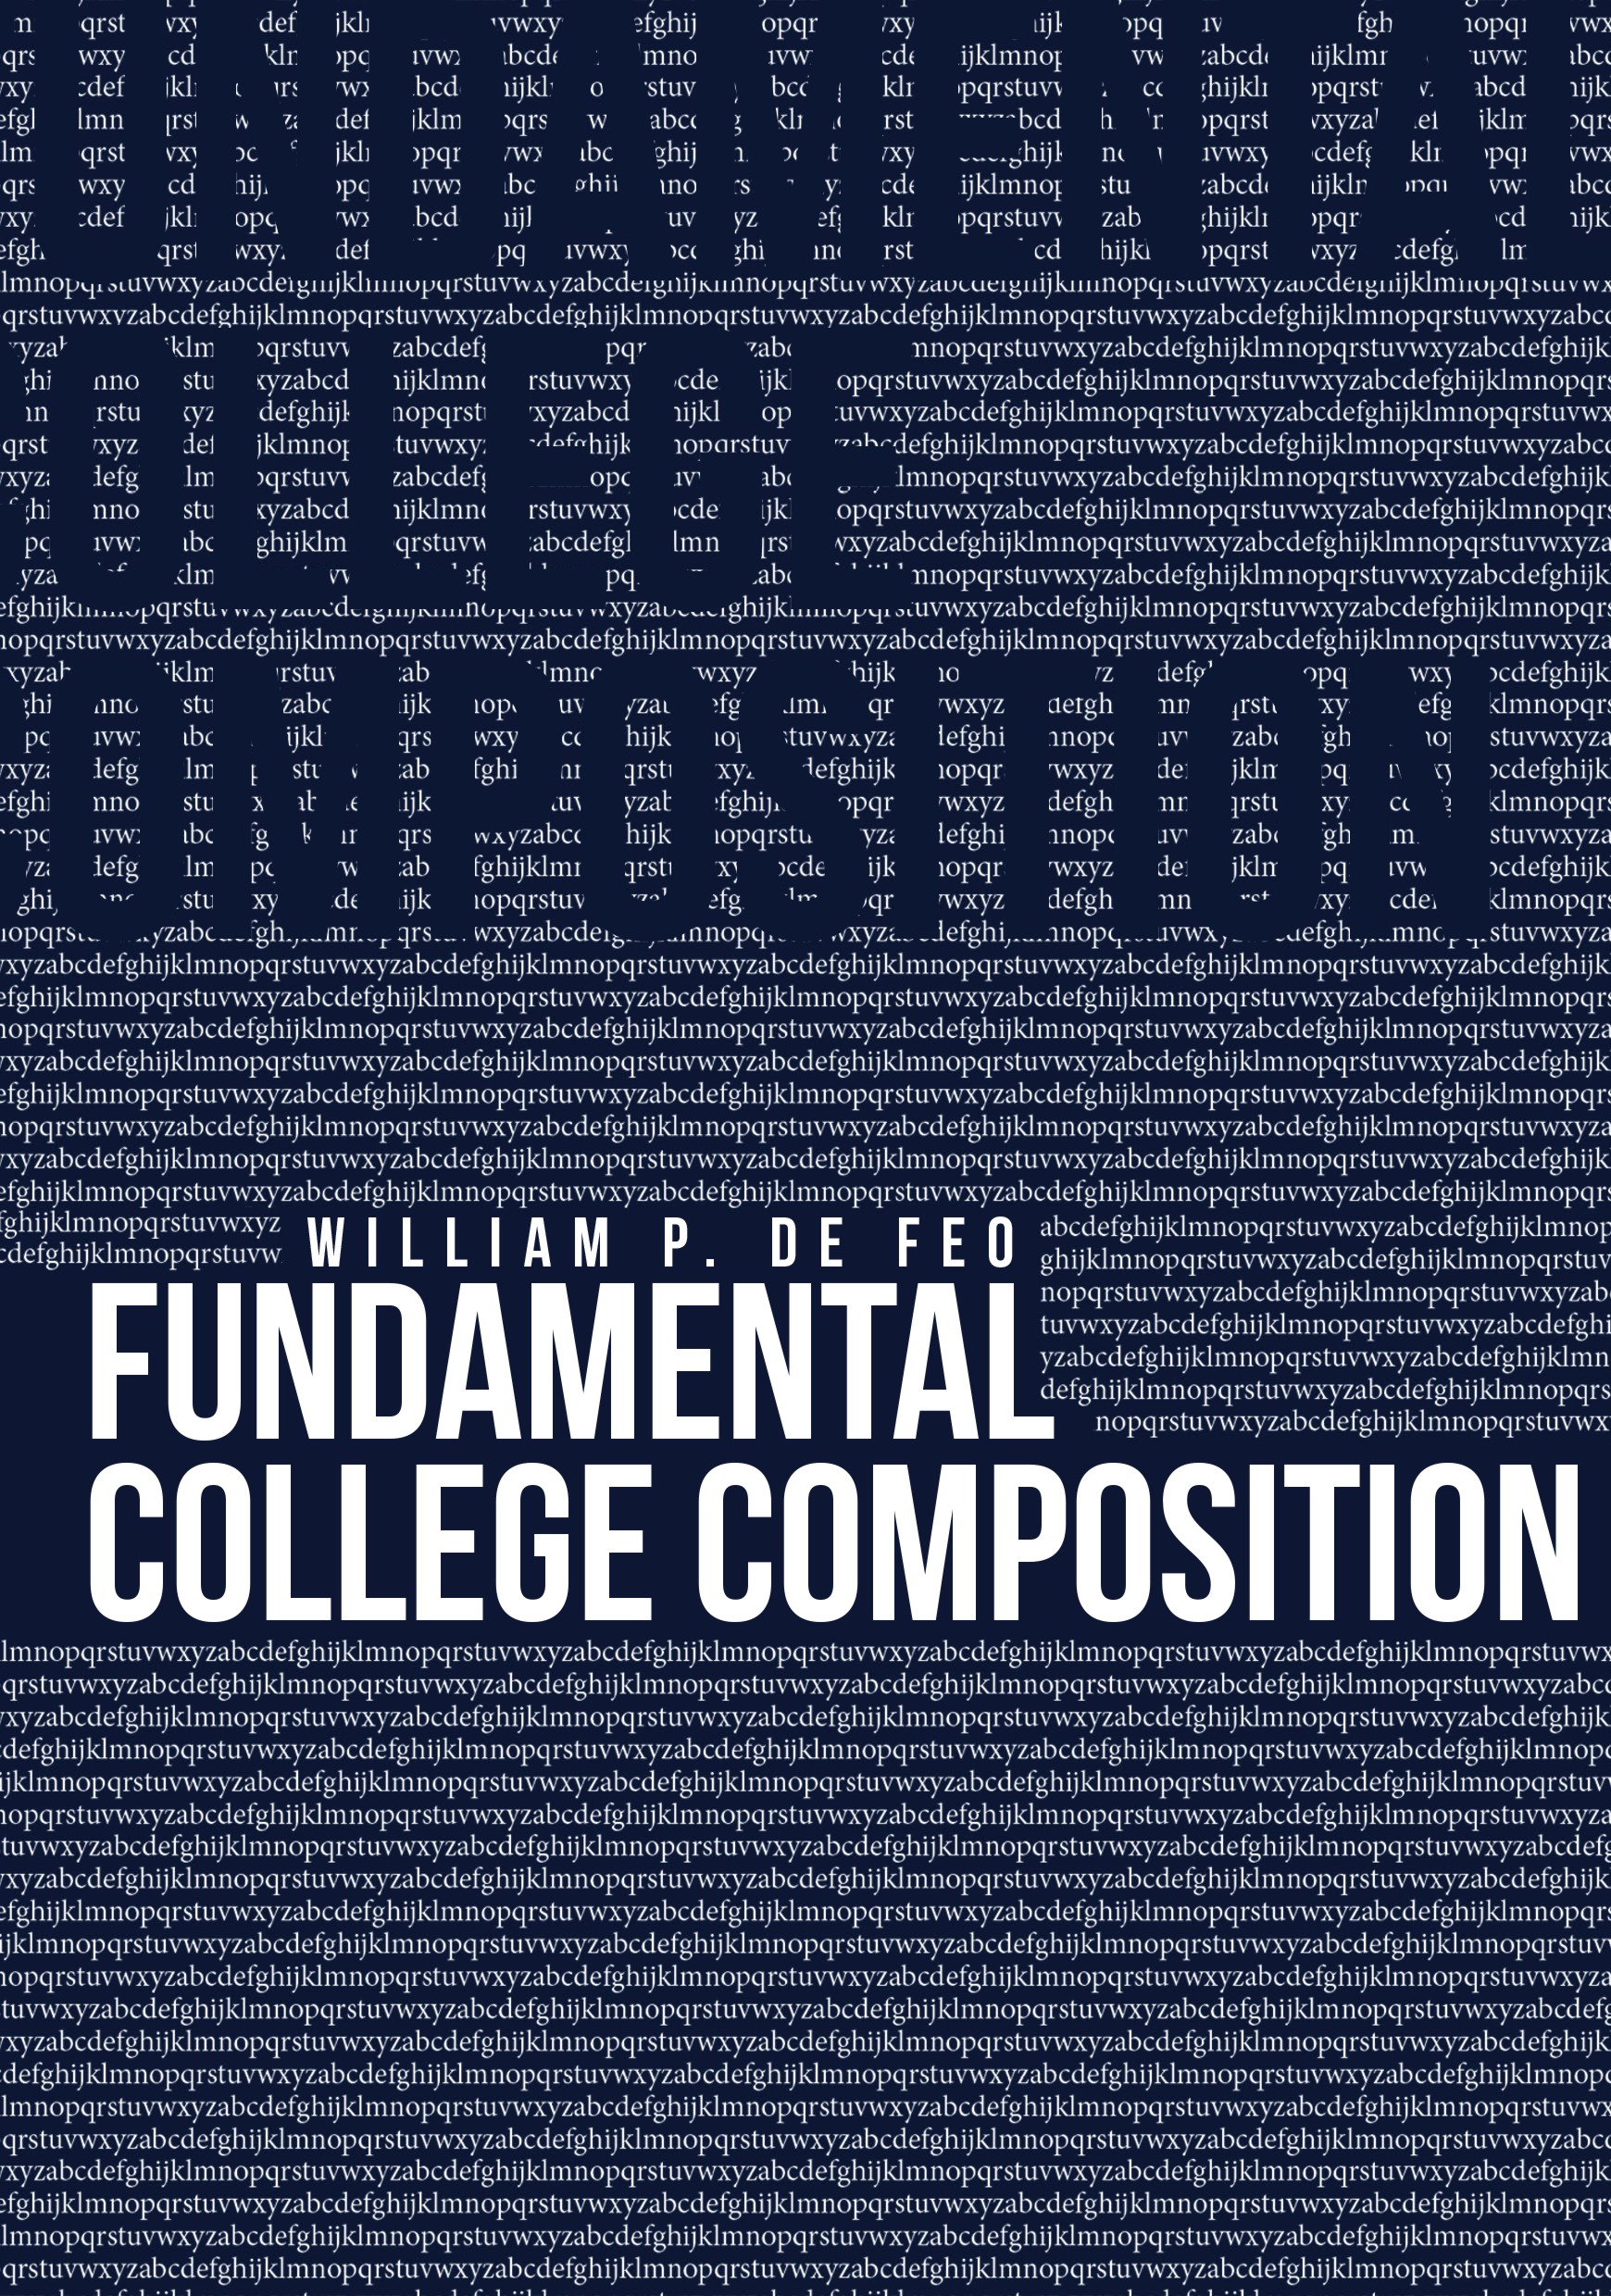 Fundamental College Composition (PBK)